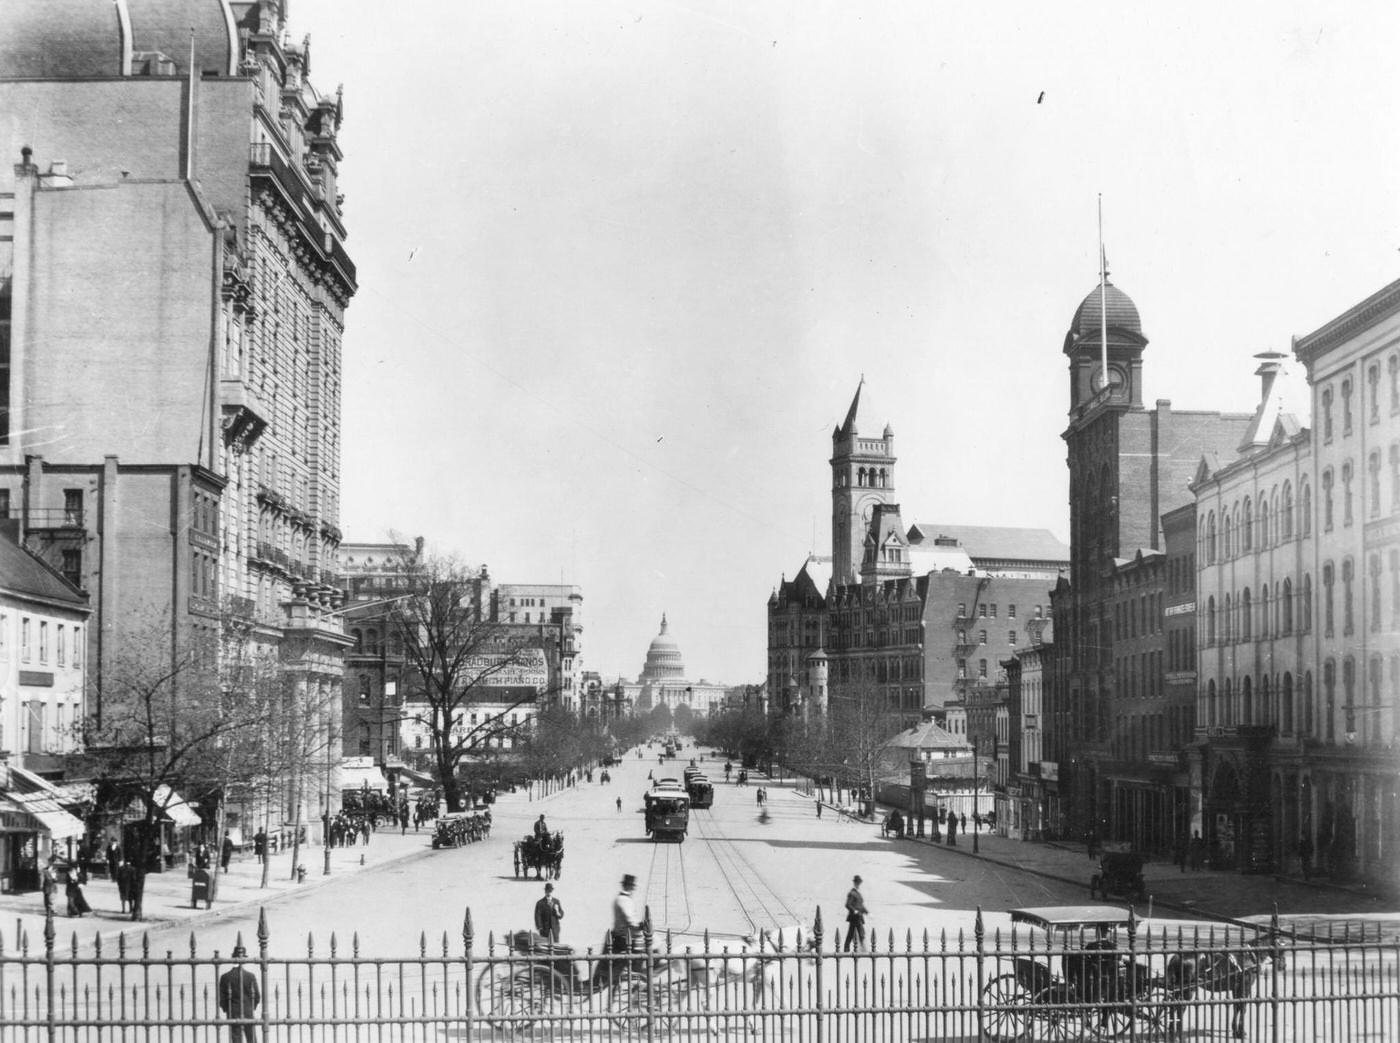 Pennsylvania Avenue looking towards the Capitol, Washington, D.C., 1865